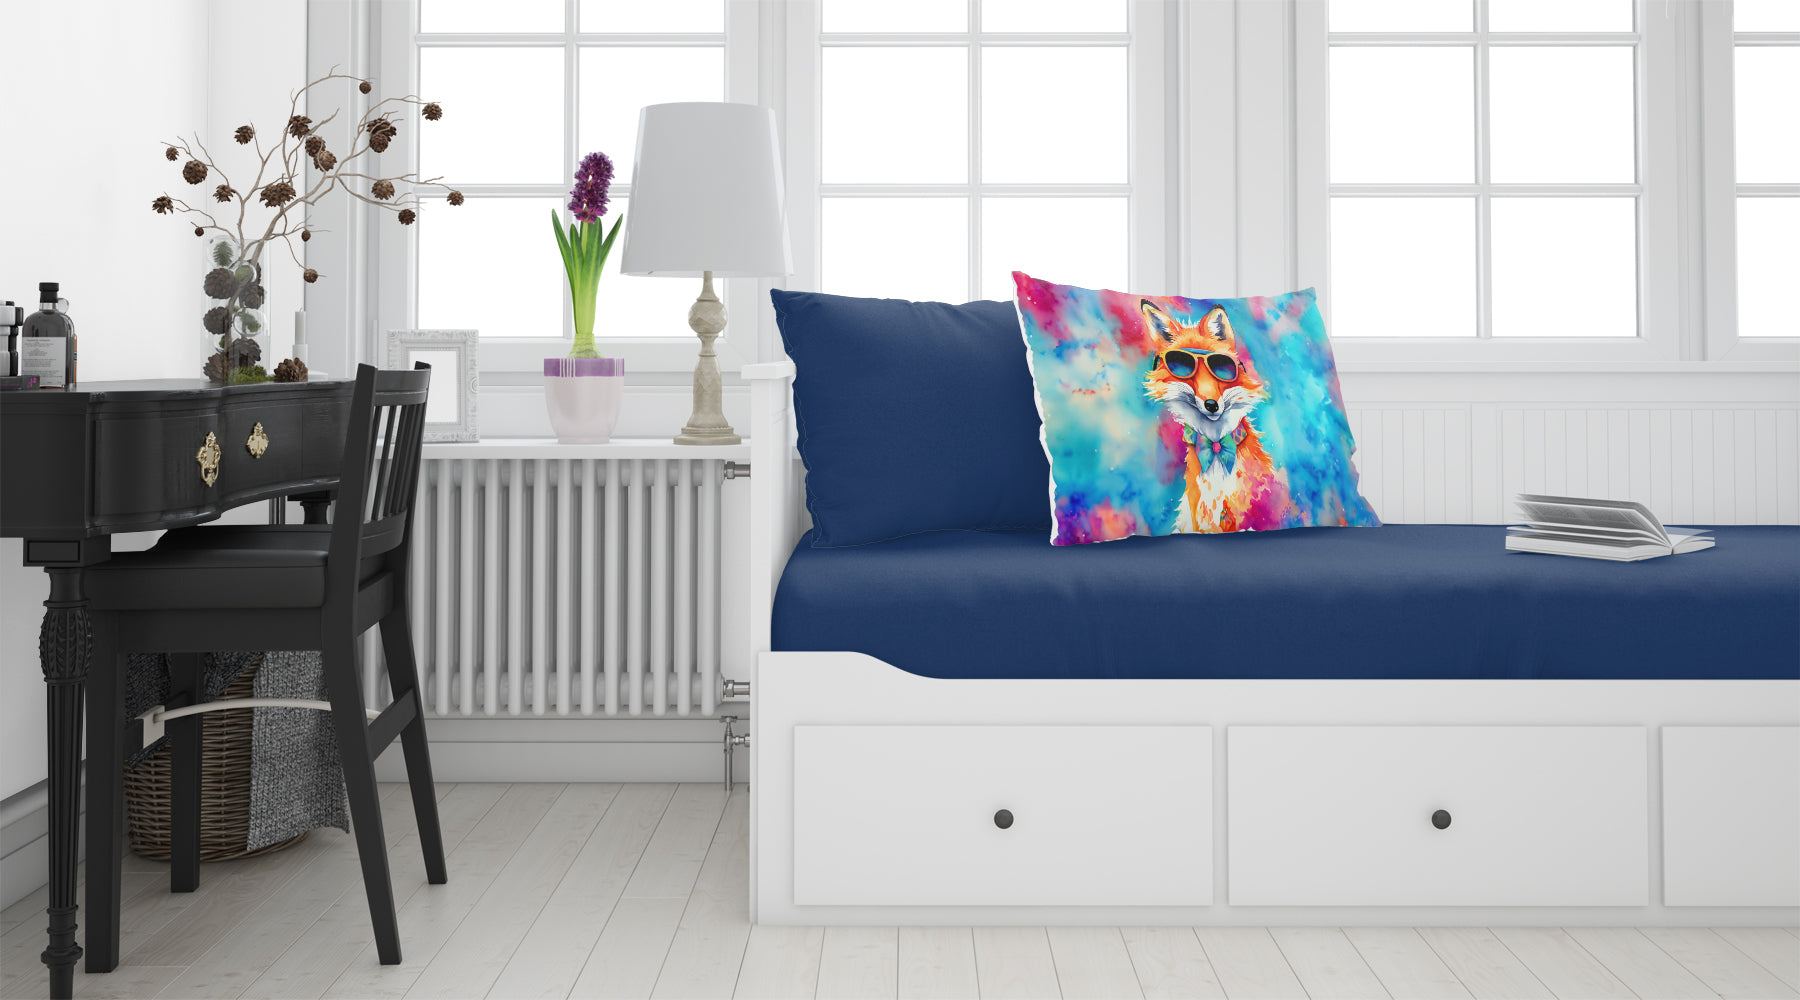 Buy this Hippie Animal Fox Standard Pillowcase